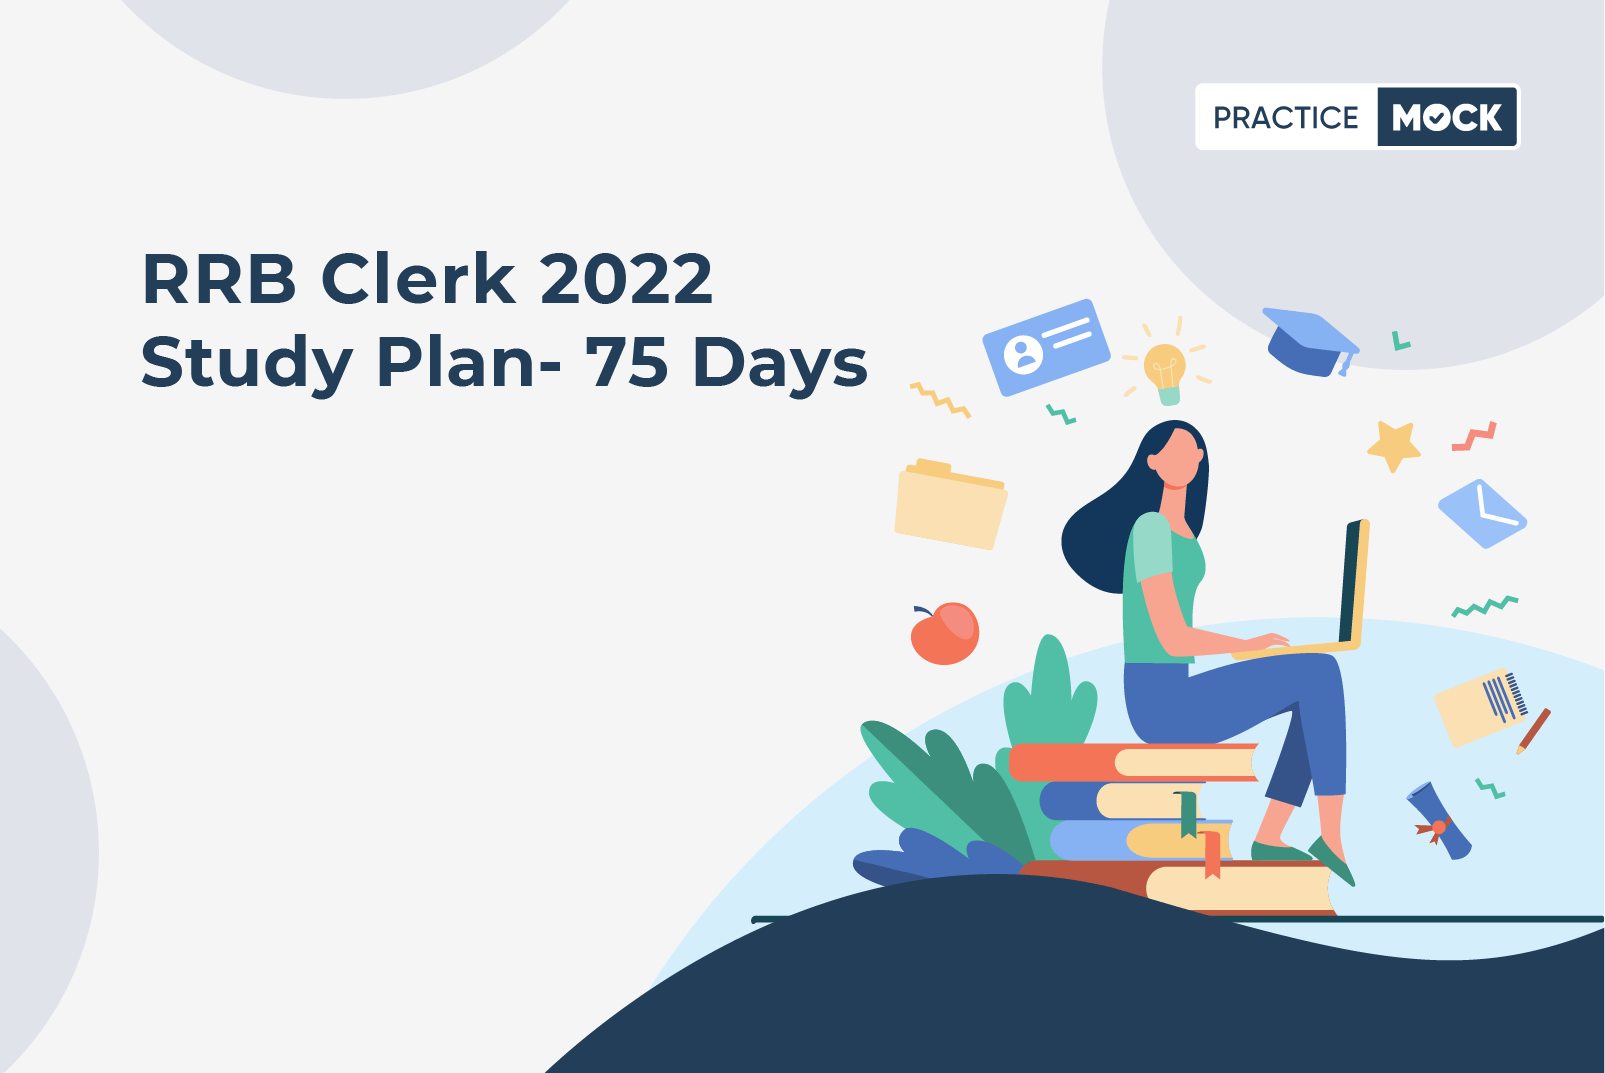 RRB Clerk Study Plan 2022- 75 Days